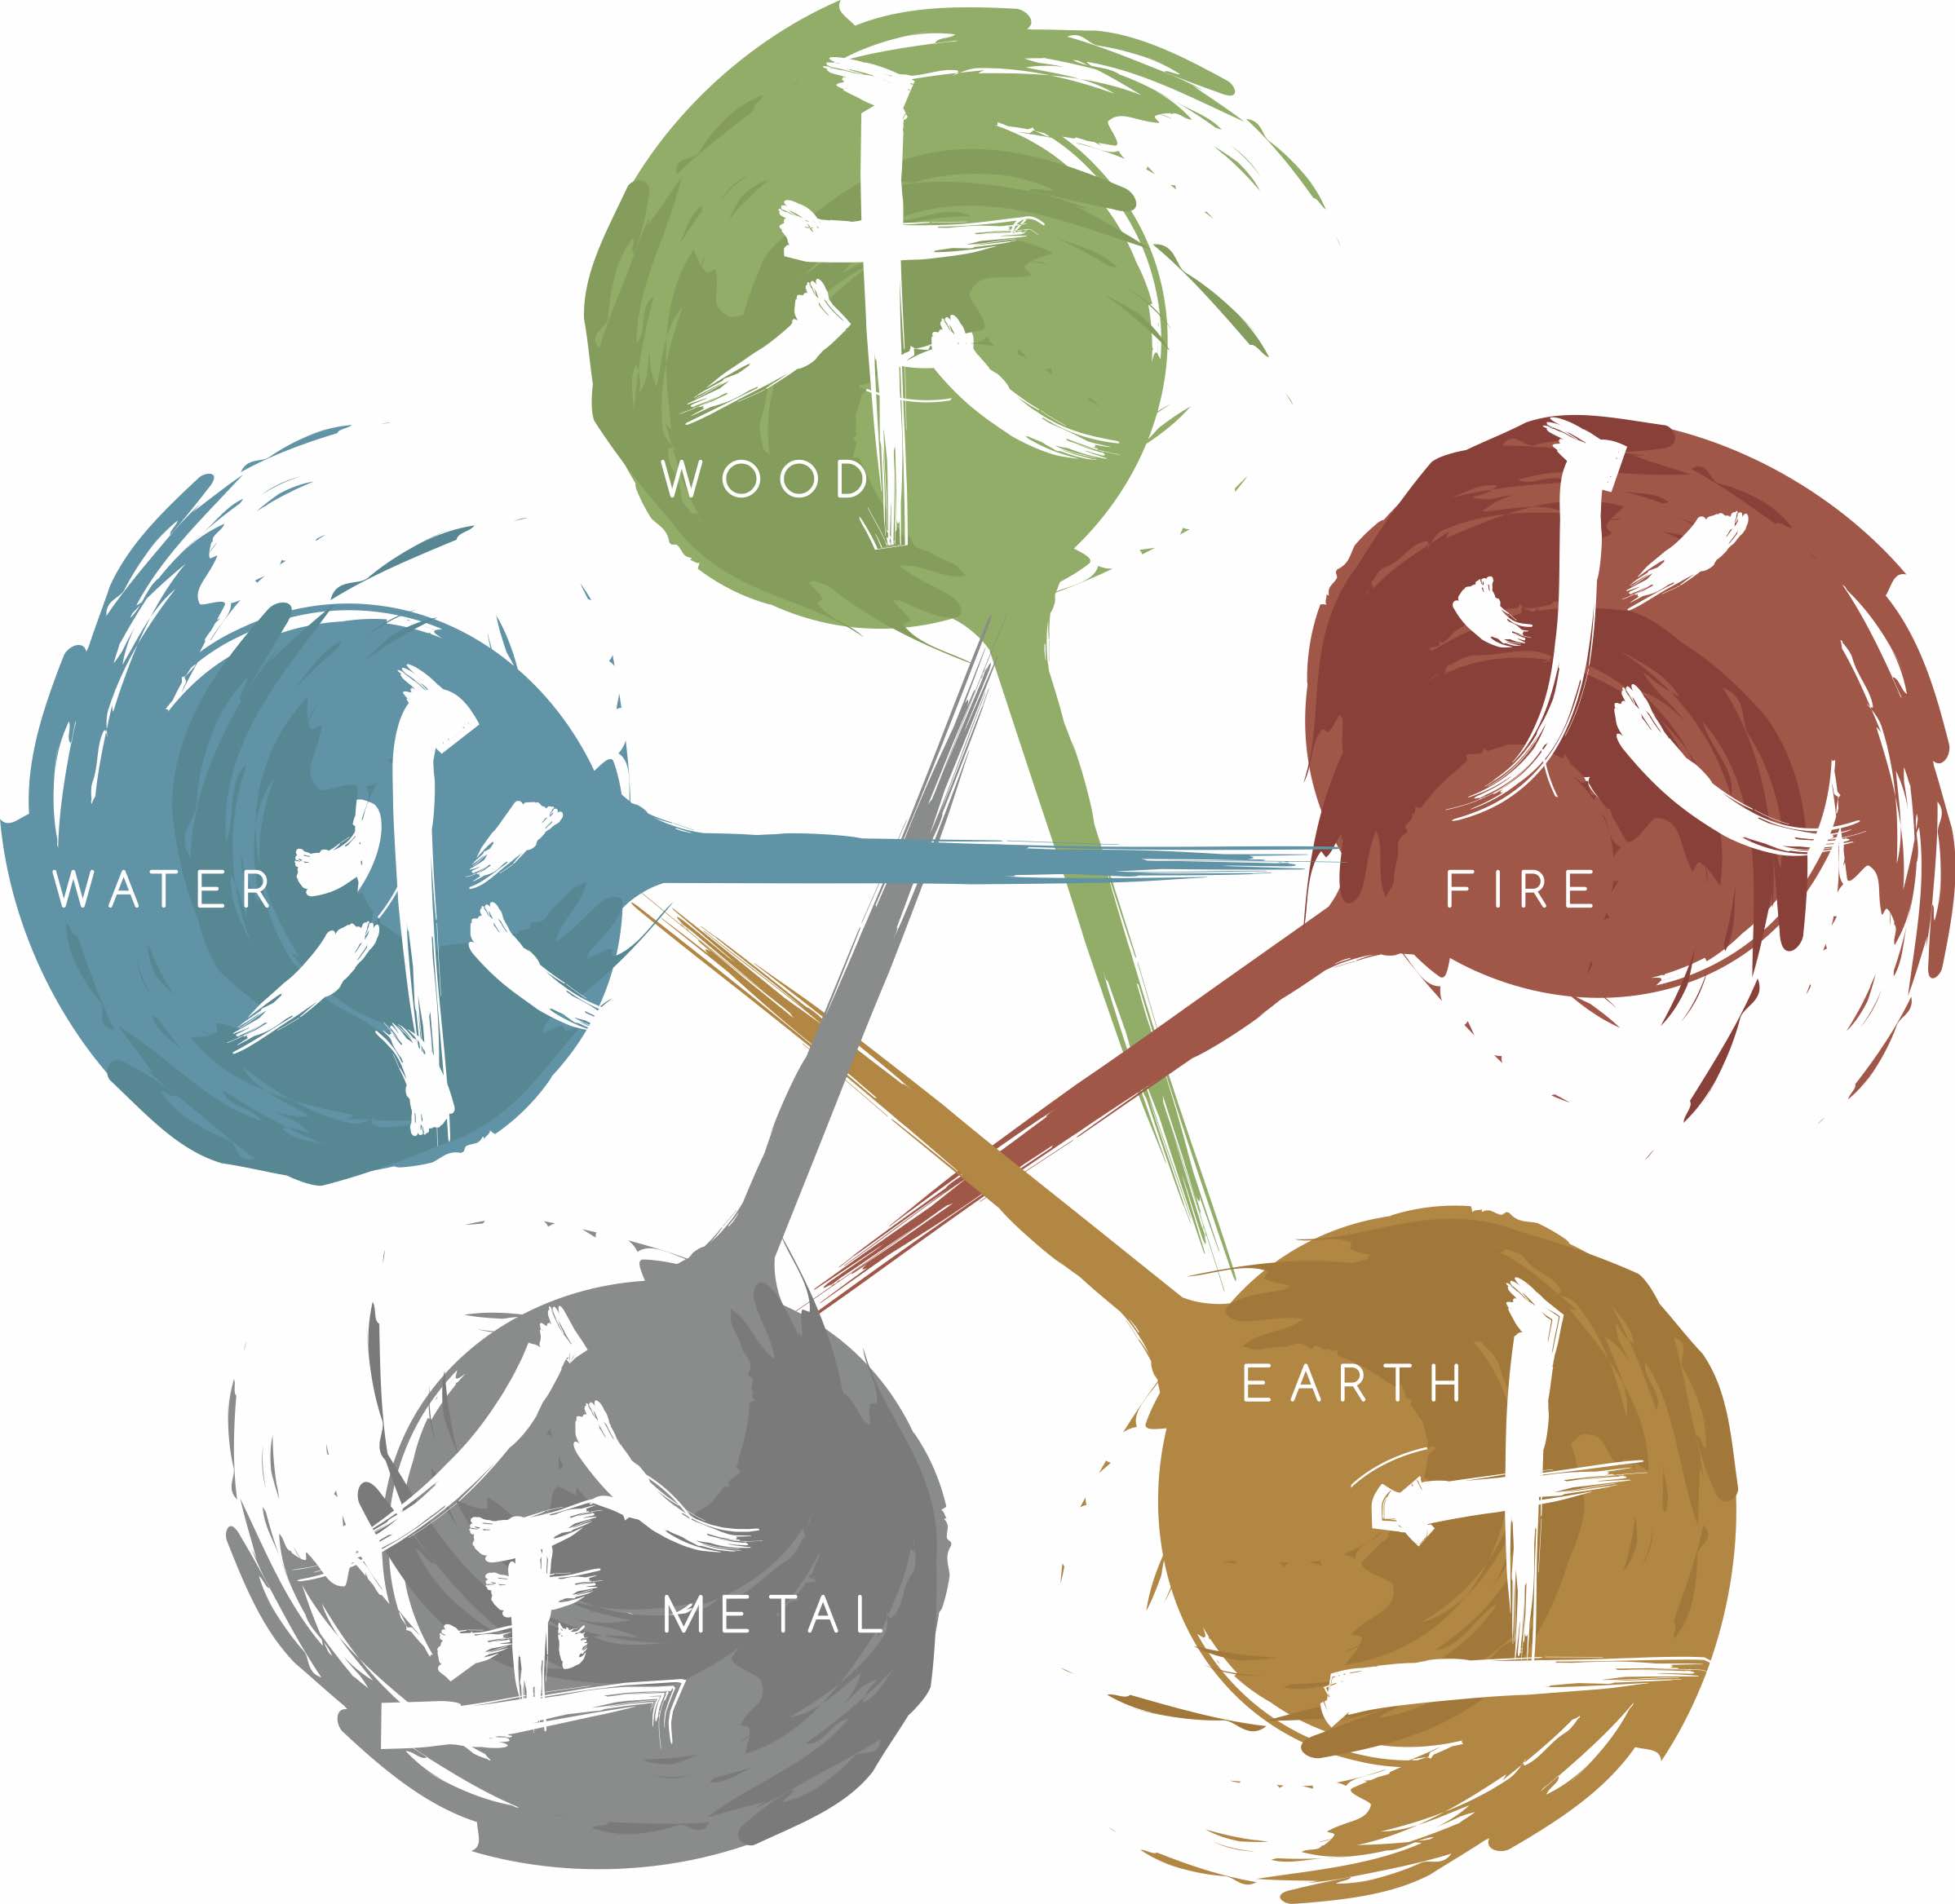 9 Star Ki Astrology based on Five elements